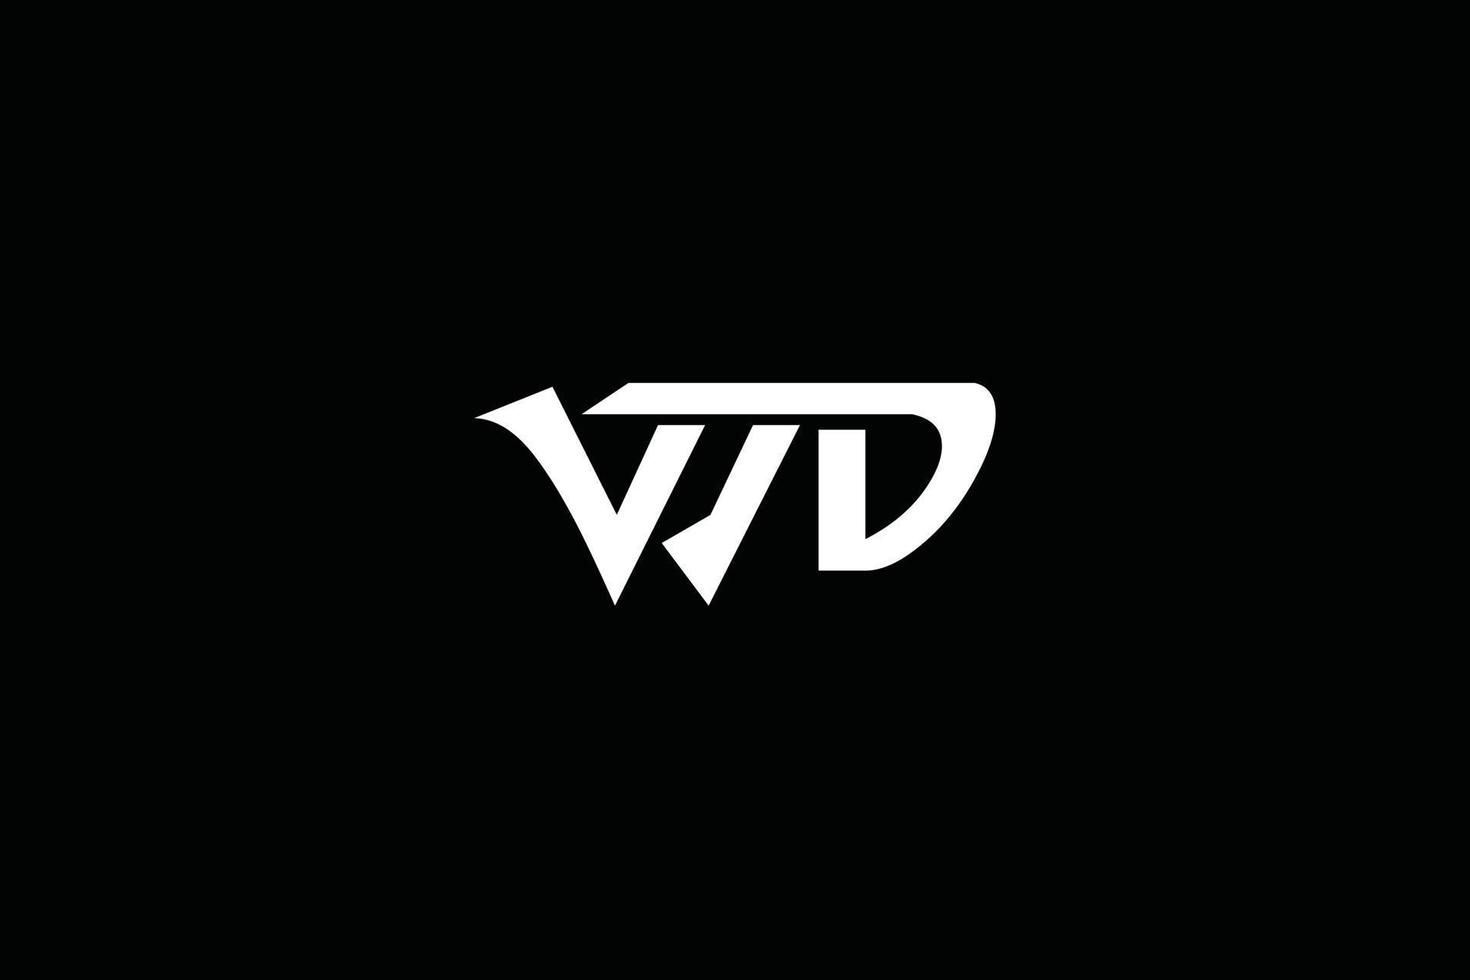 WD Letter Logo Design. Creative Modern W D  Letters icon vector Illustration.